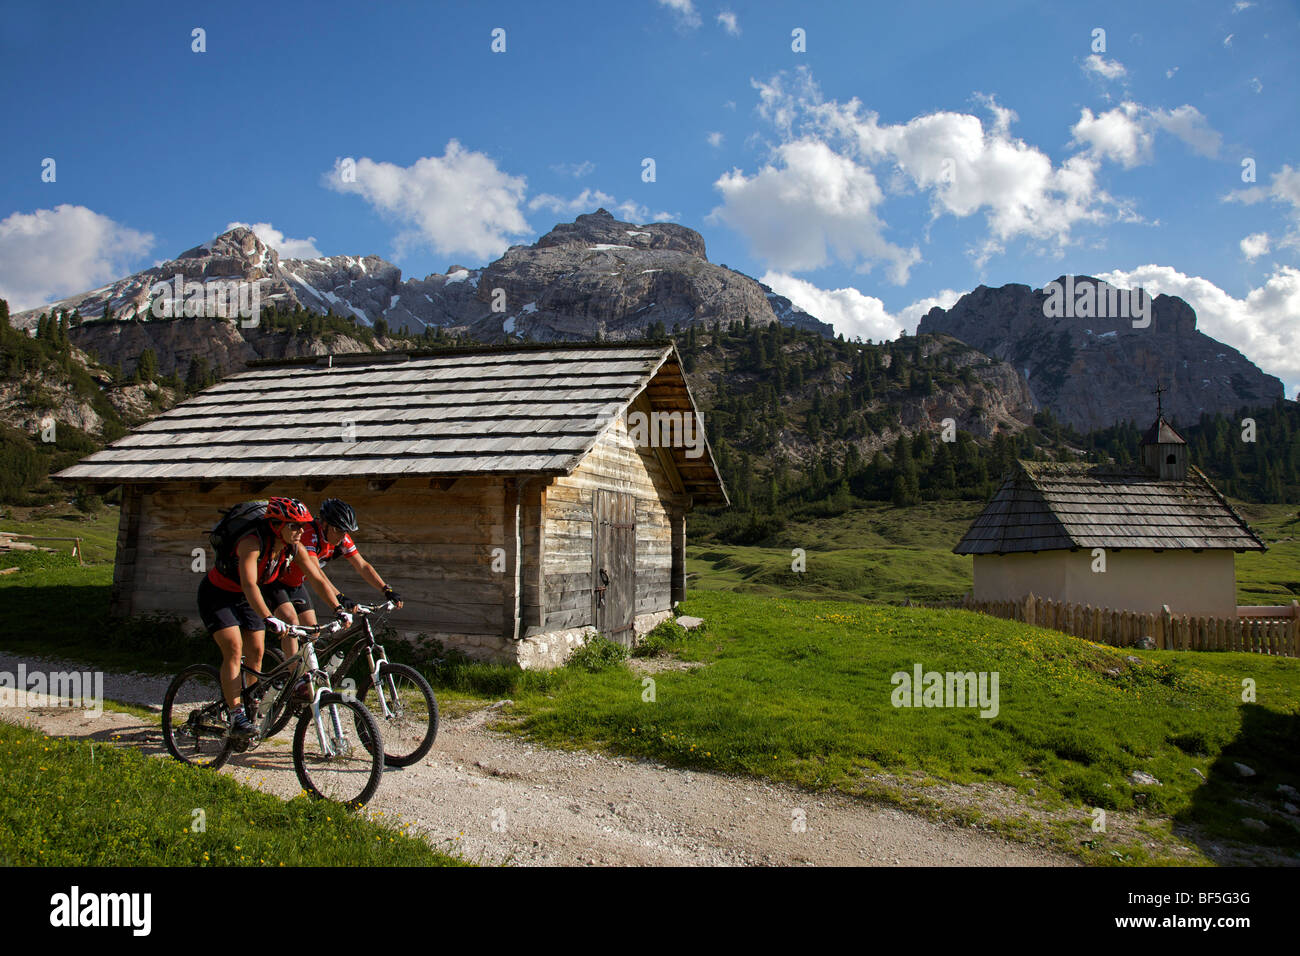 Mountain-Bike-Fahrer im Bergdorf Fodara Vedla, Parco Naturale Fanes-Sennes-Prags, Trentino, Südtirol, Italien, Eu Stockfoto